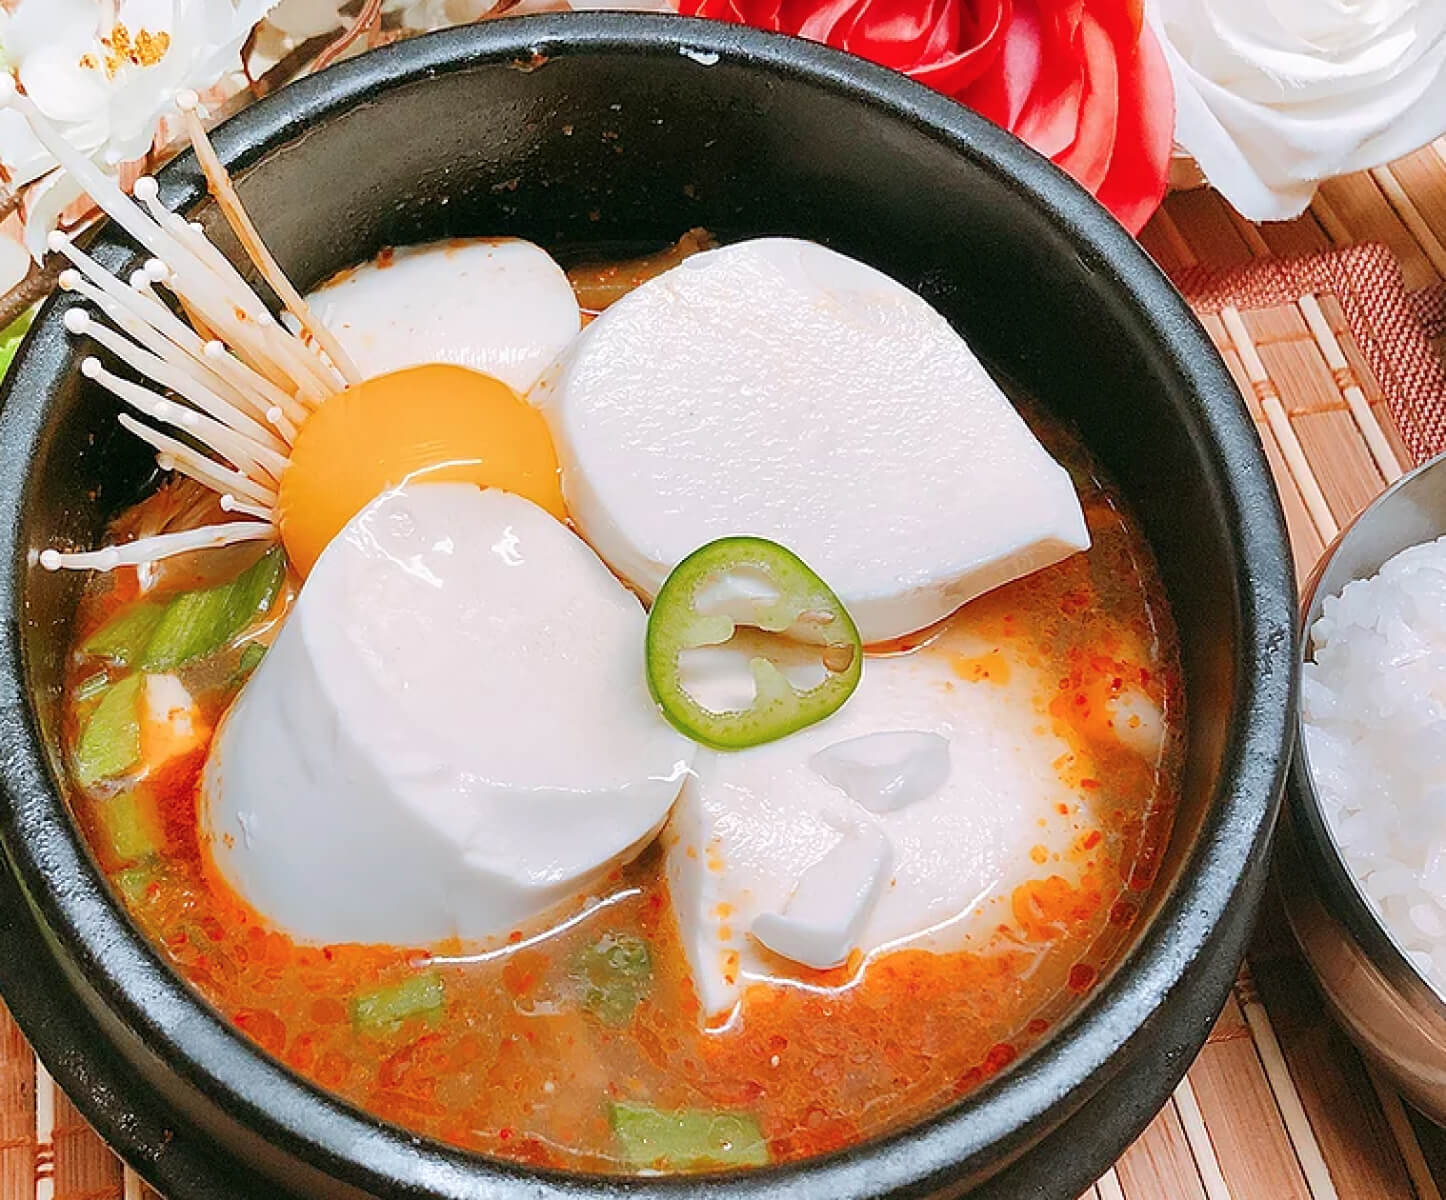 Sooda Korean BBQ